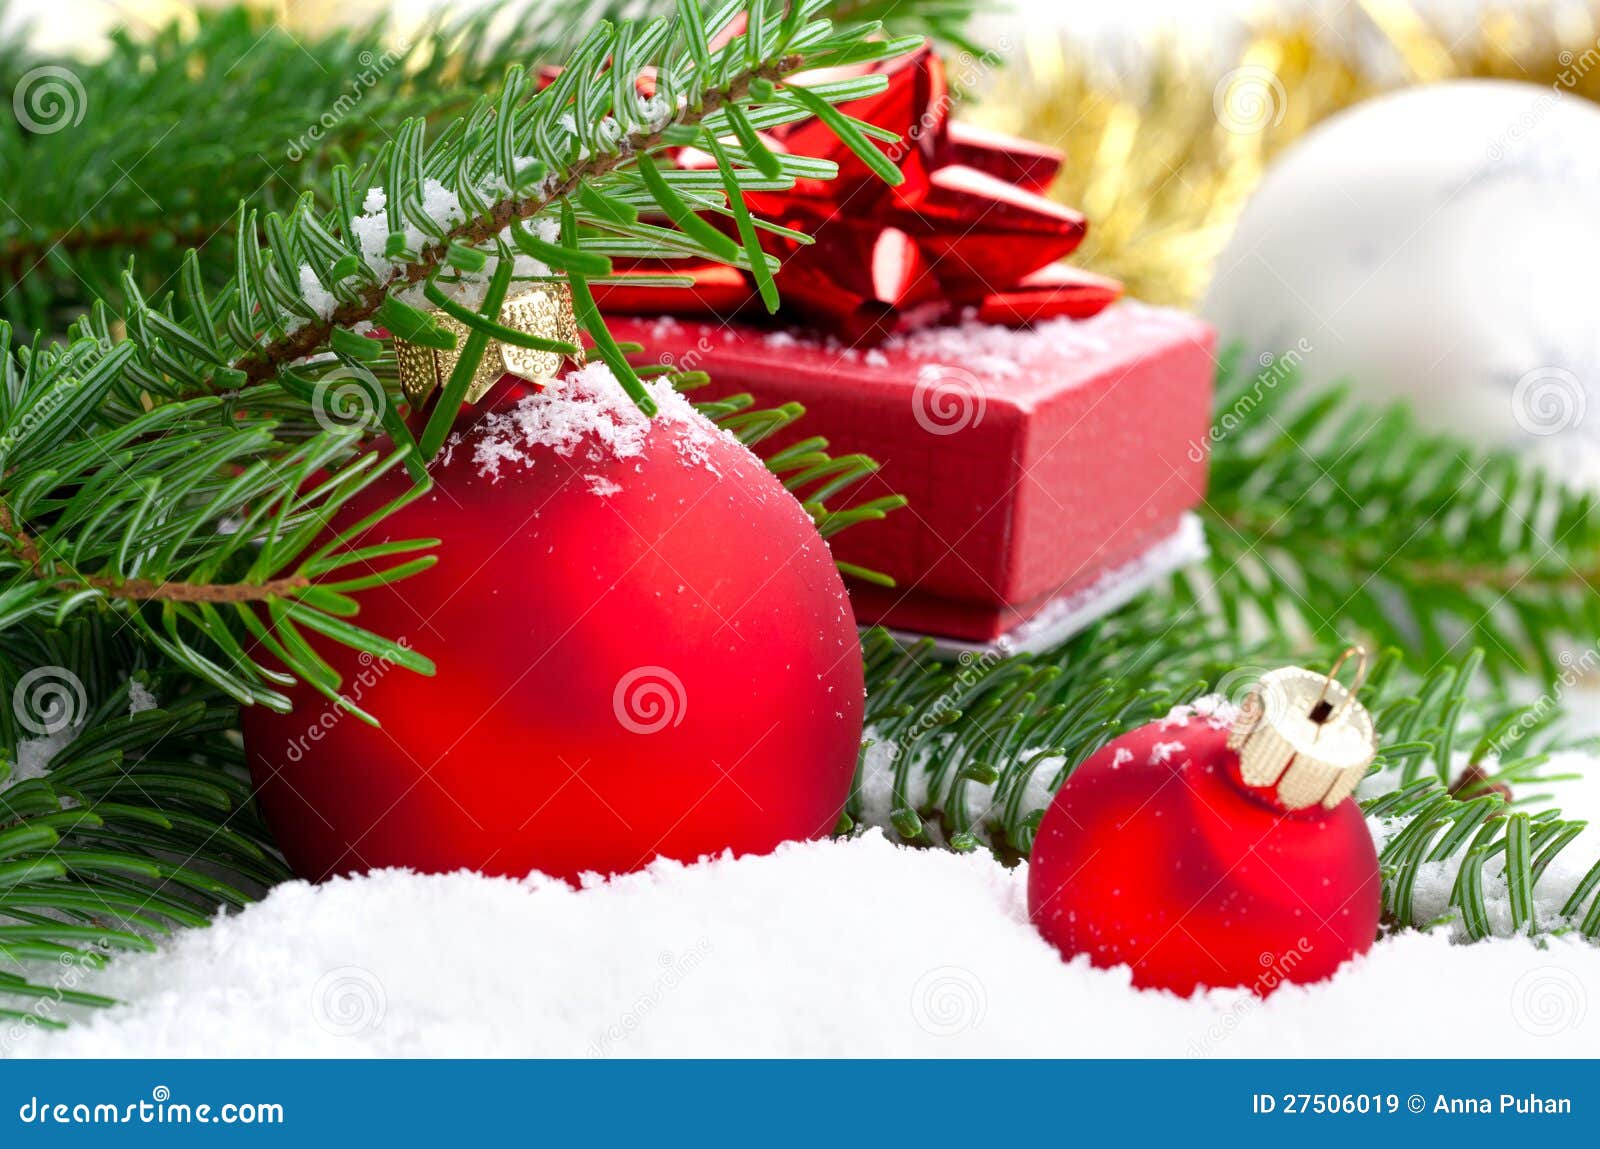 Red Christmas ball stock image. Image of gift, abstract - 27506019